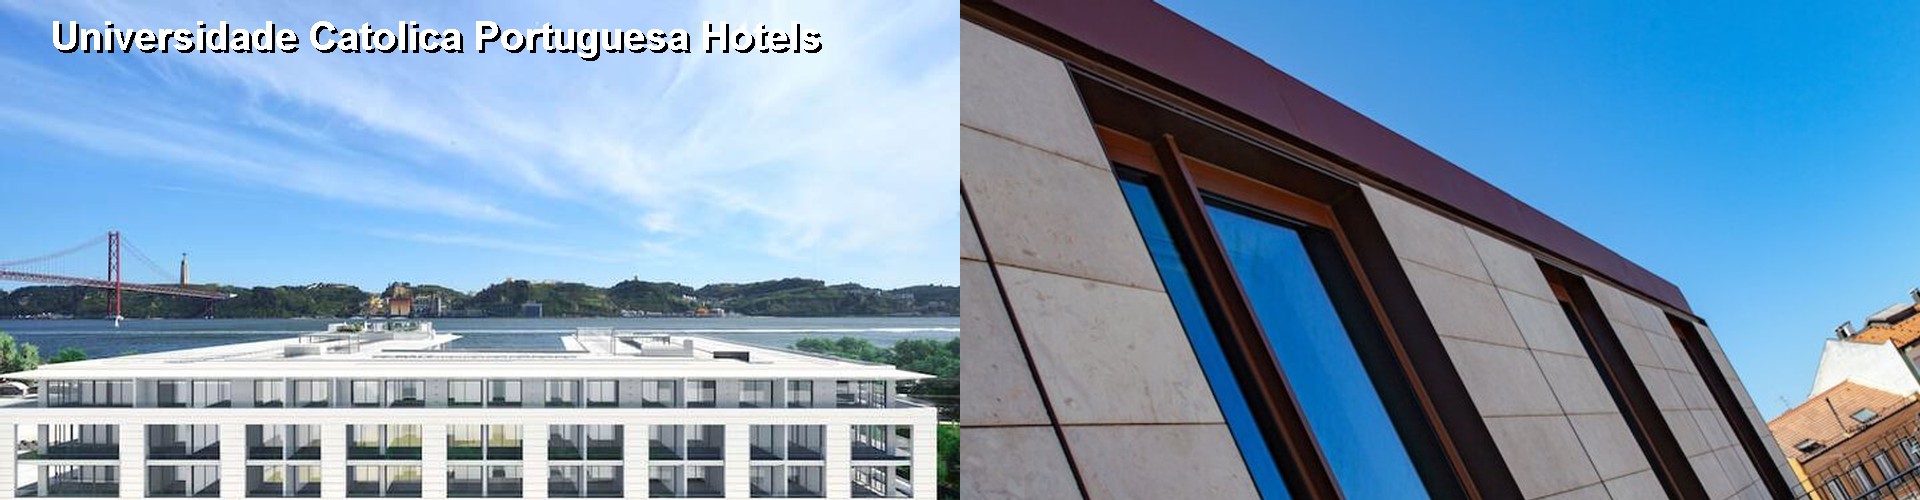 5 Best Hotels near Universidade Catolica Portuguesa